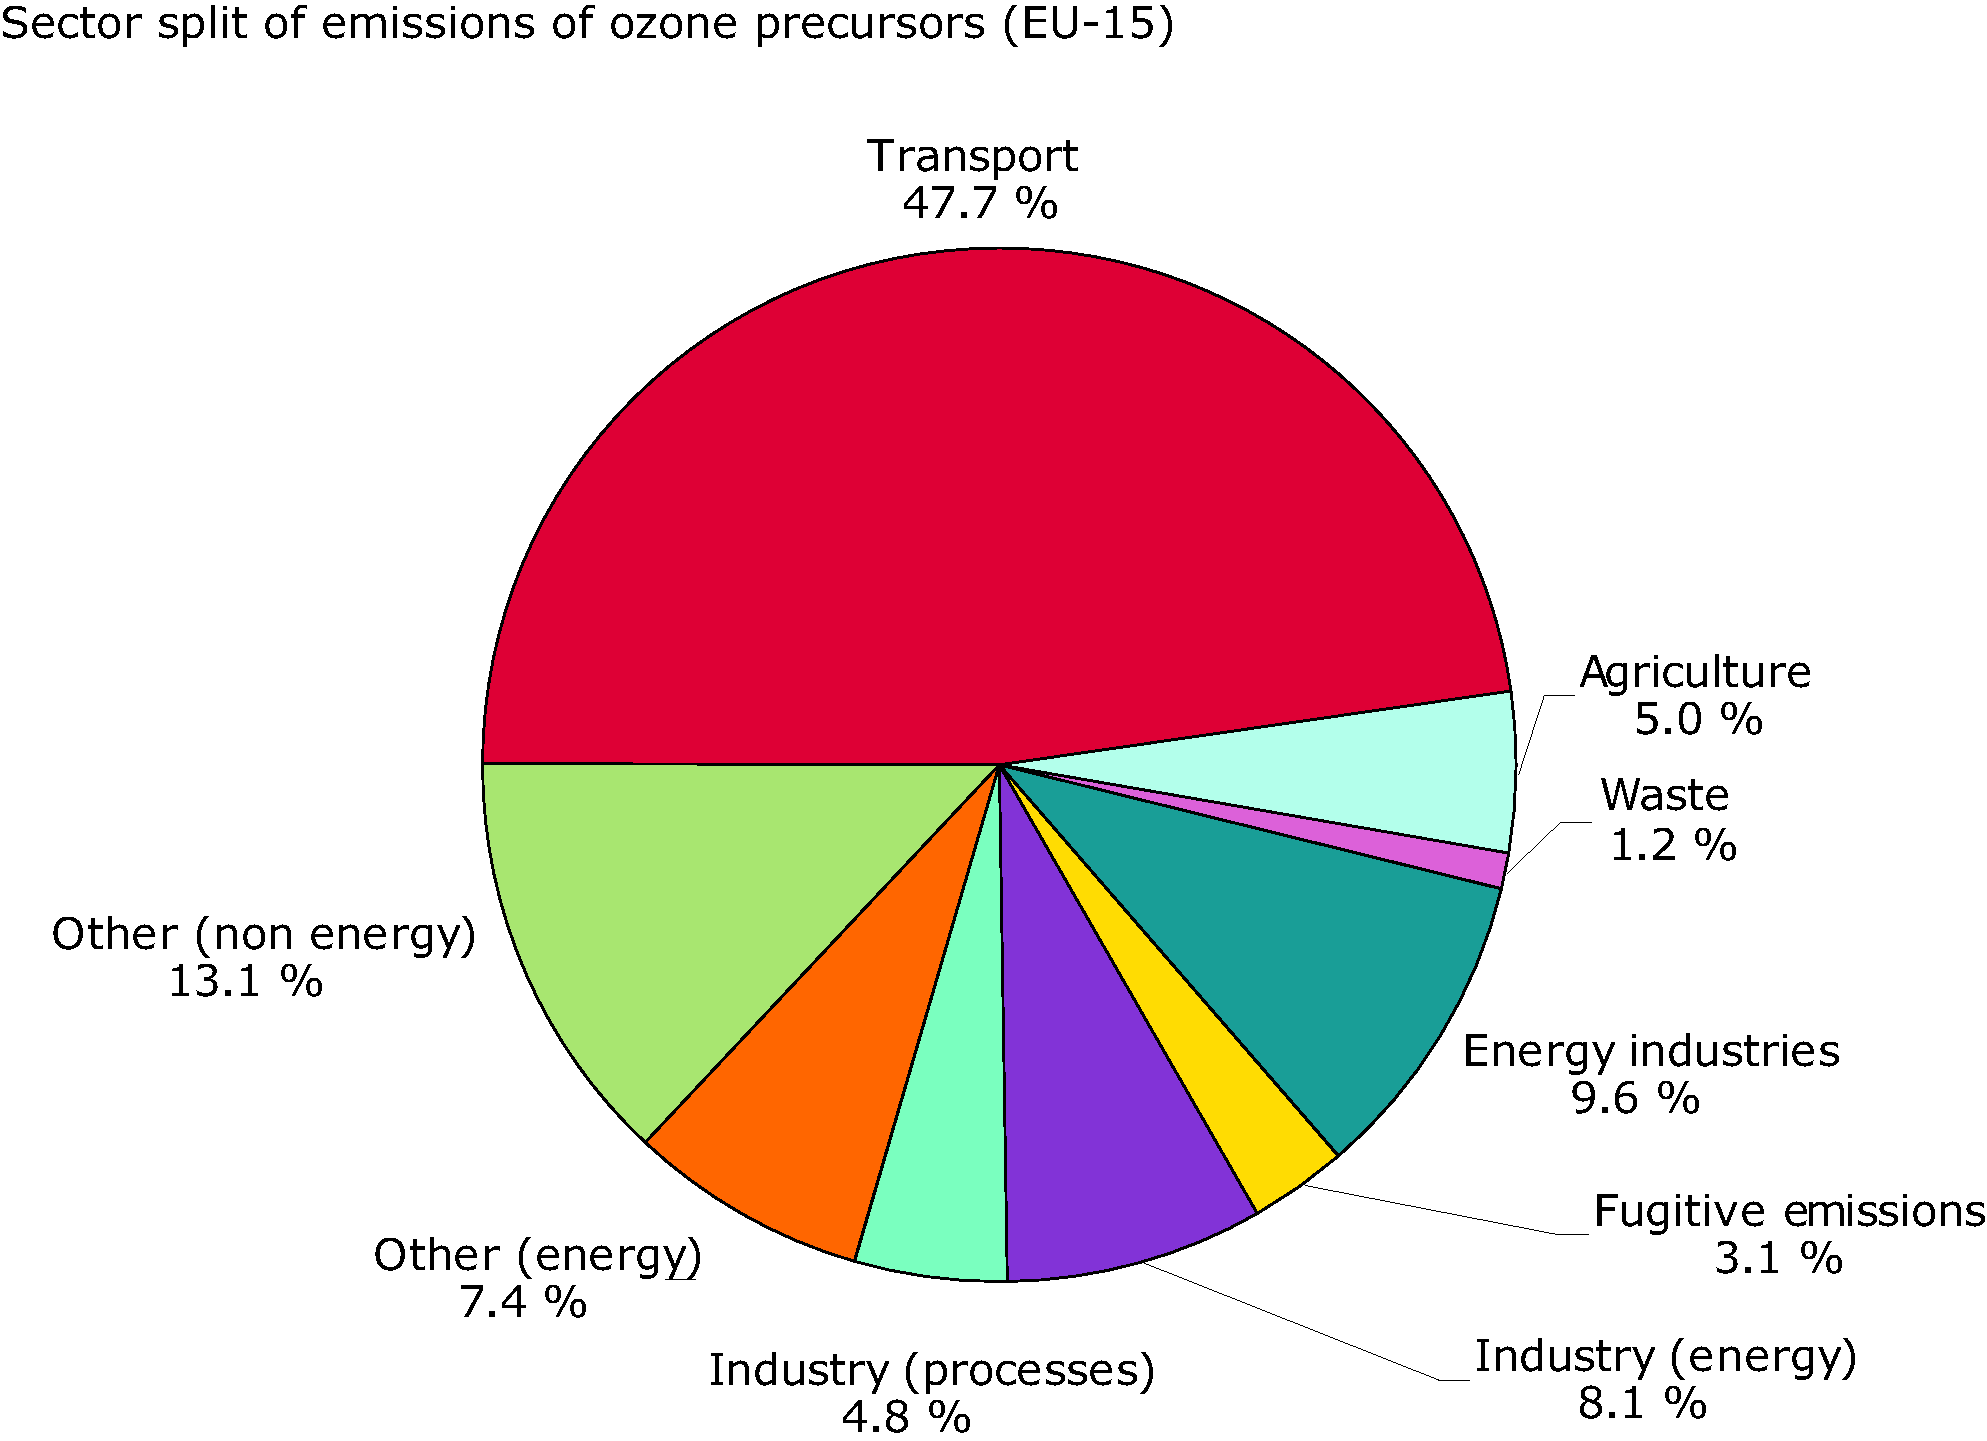 Sector split for emissions of ozone precursors (EU-15), 2002